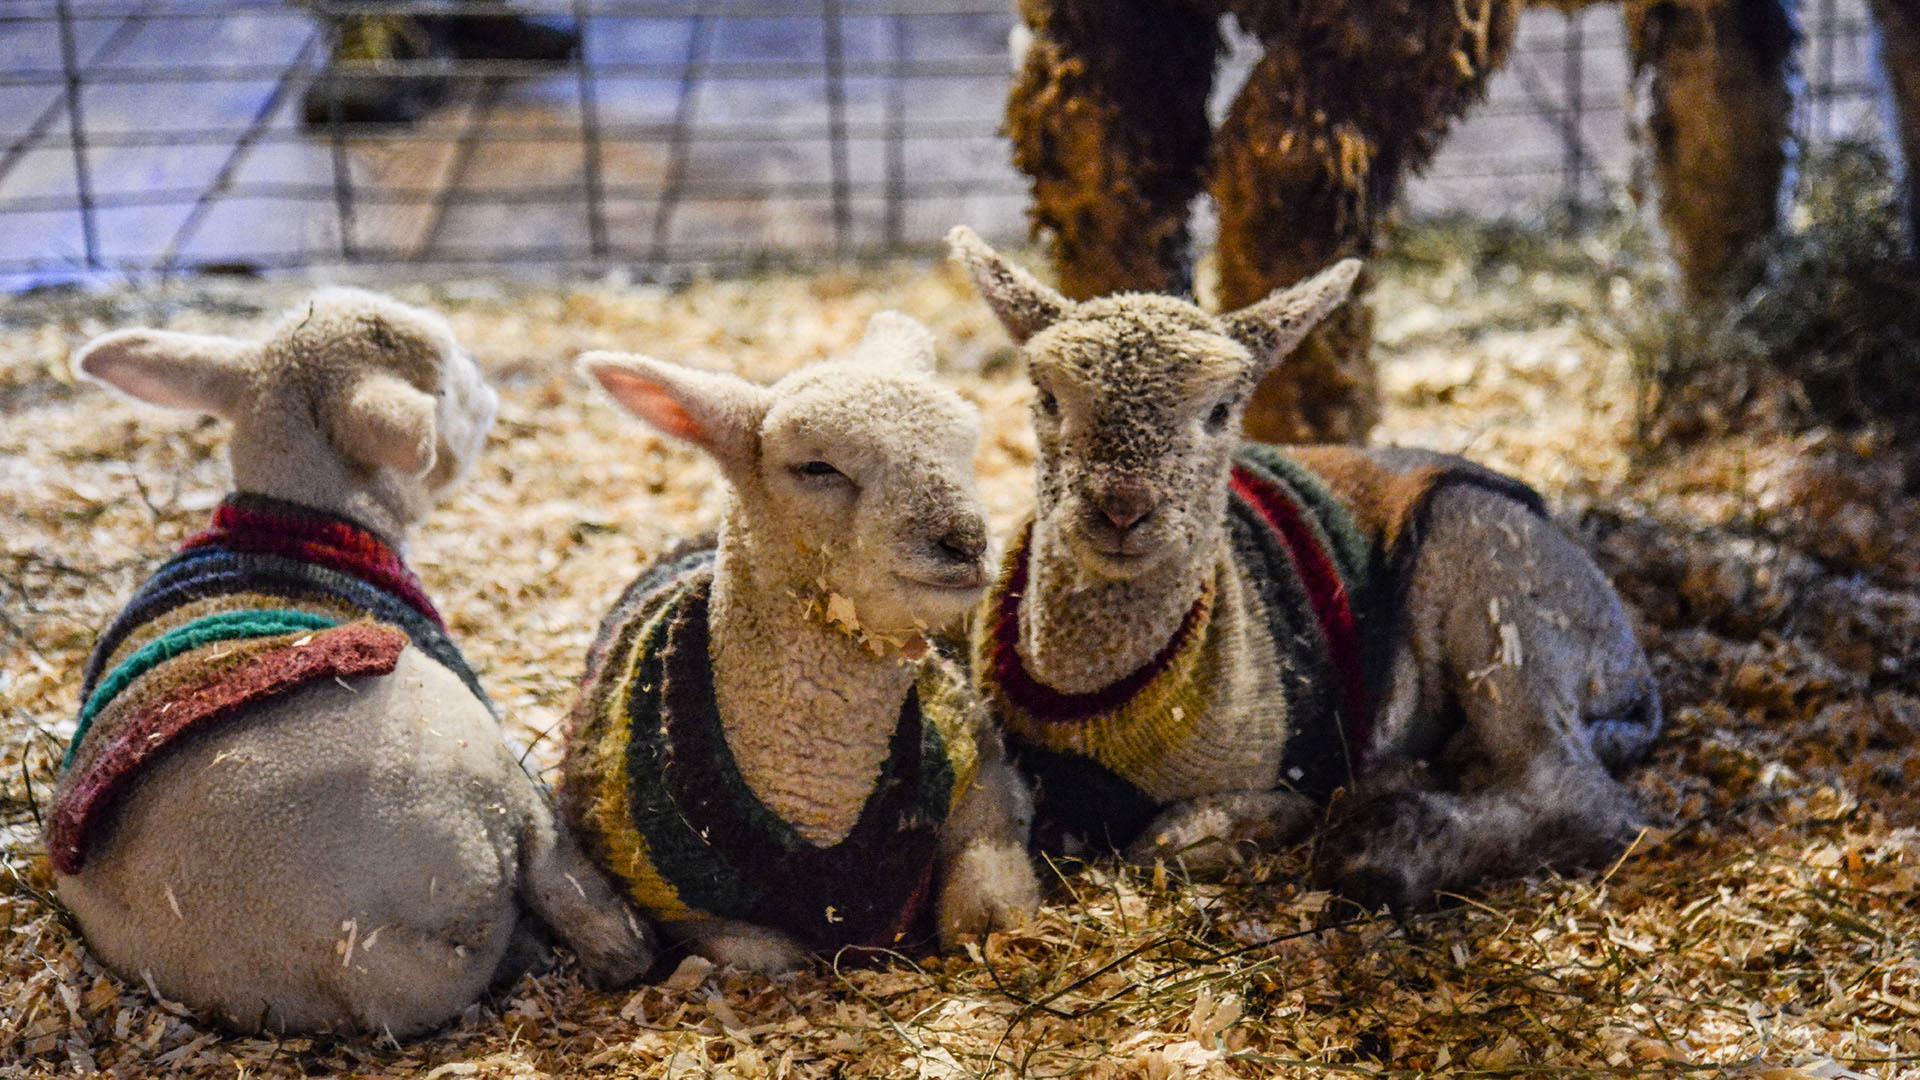 Baby Farm Animal Celebration At Billings Farm - Sheep - HD Wallpaper 